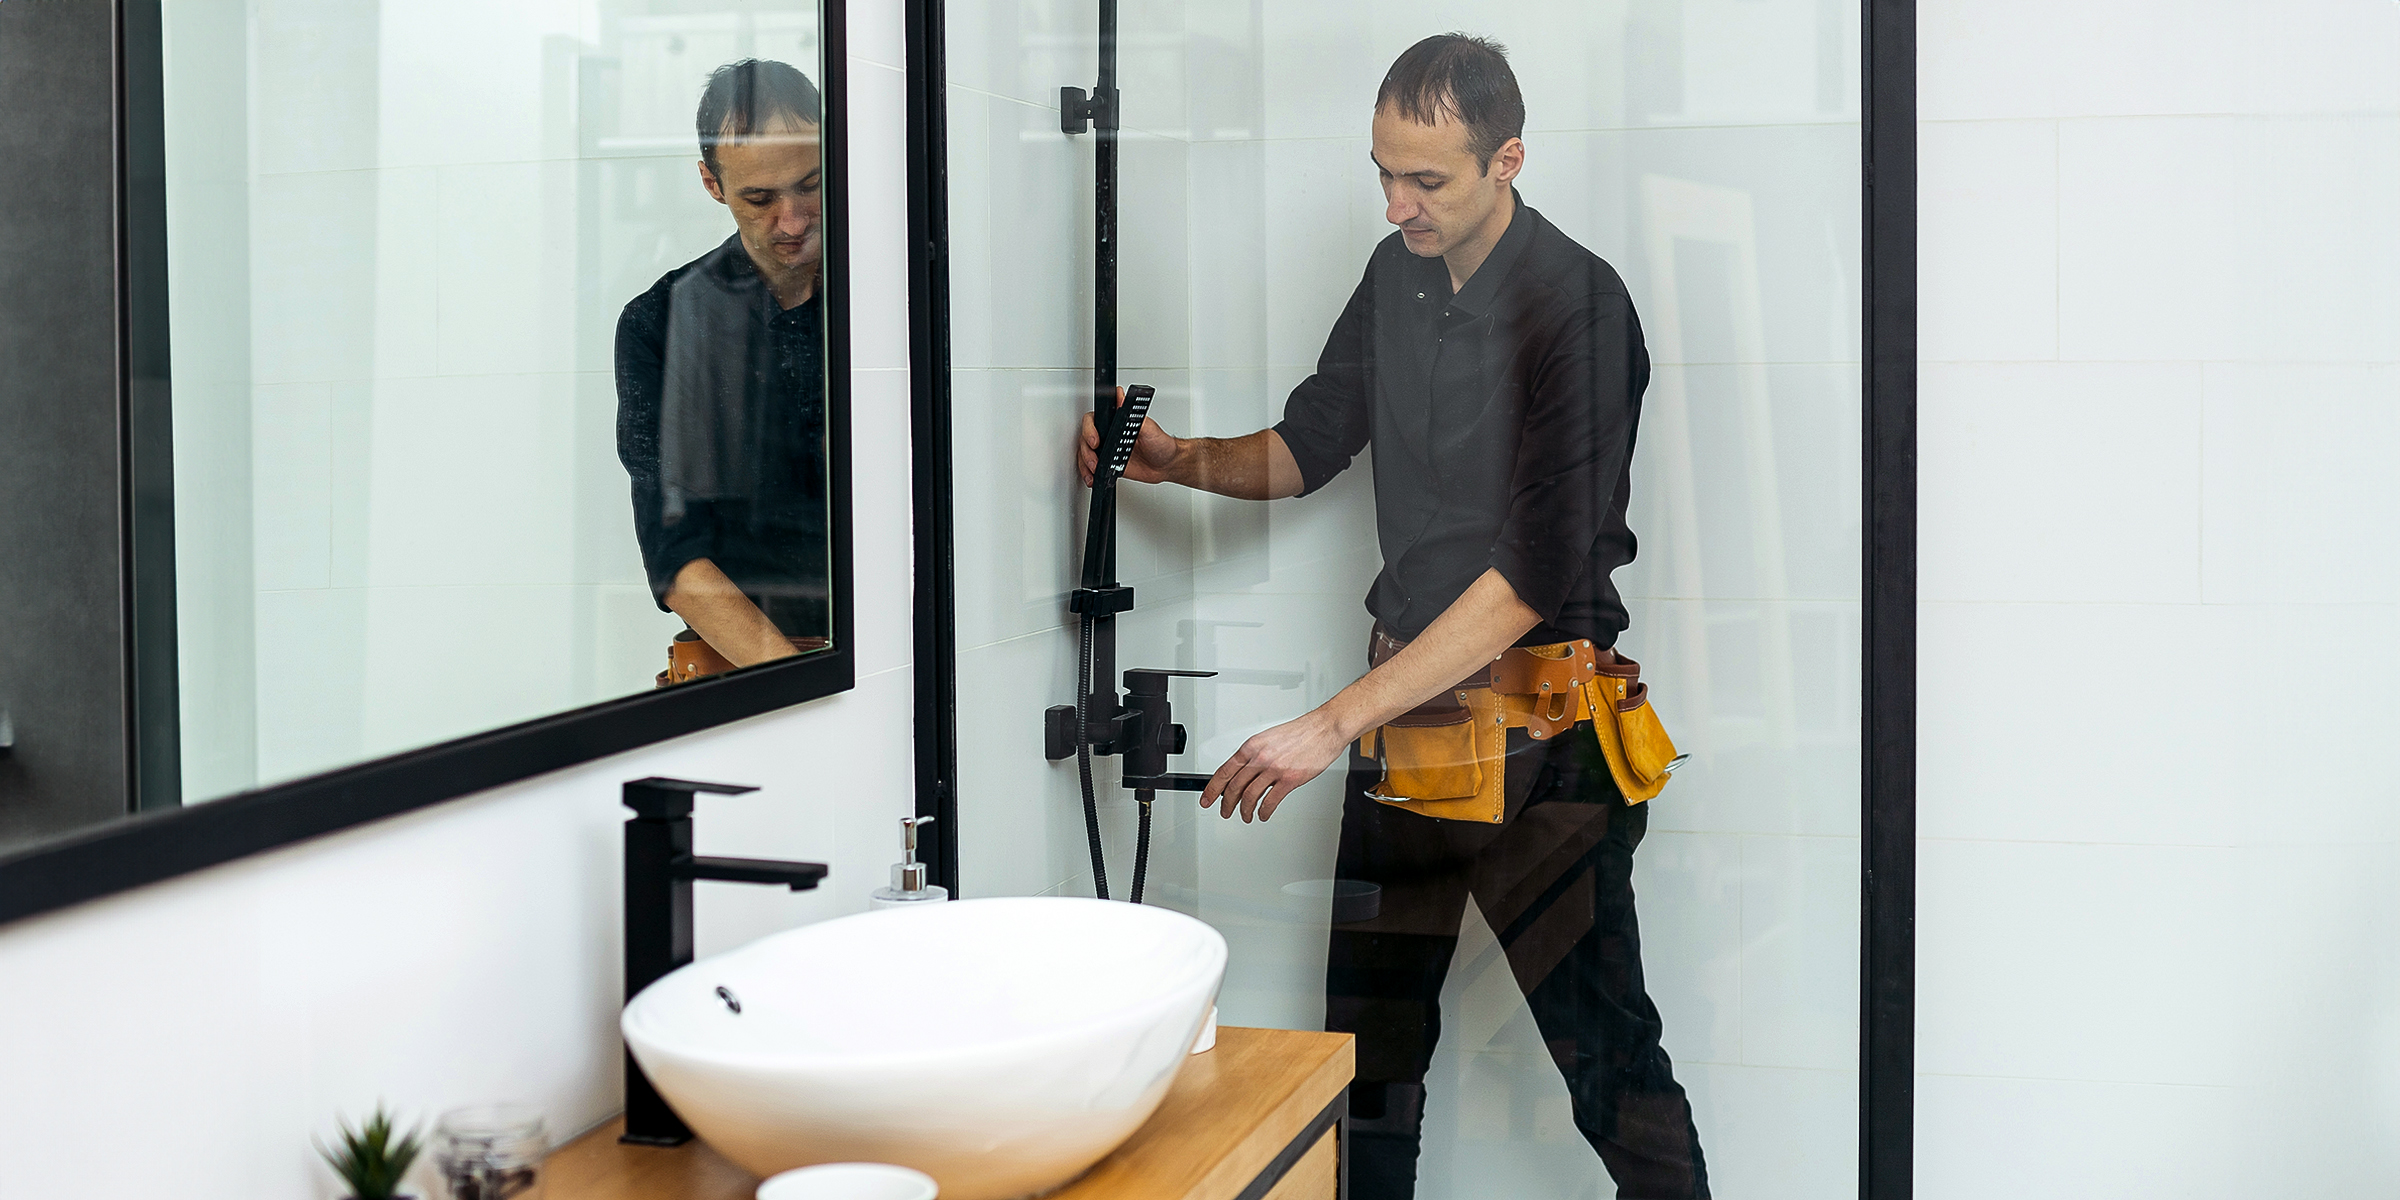 A man fixing a shower in a bathroom | Source: Shutterstock